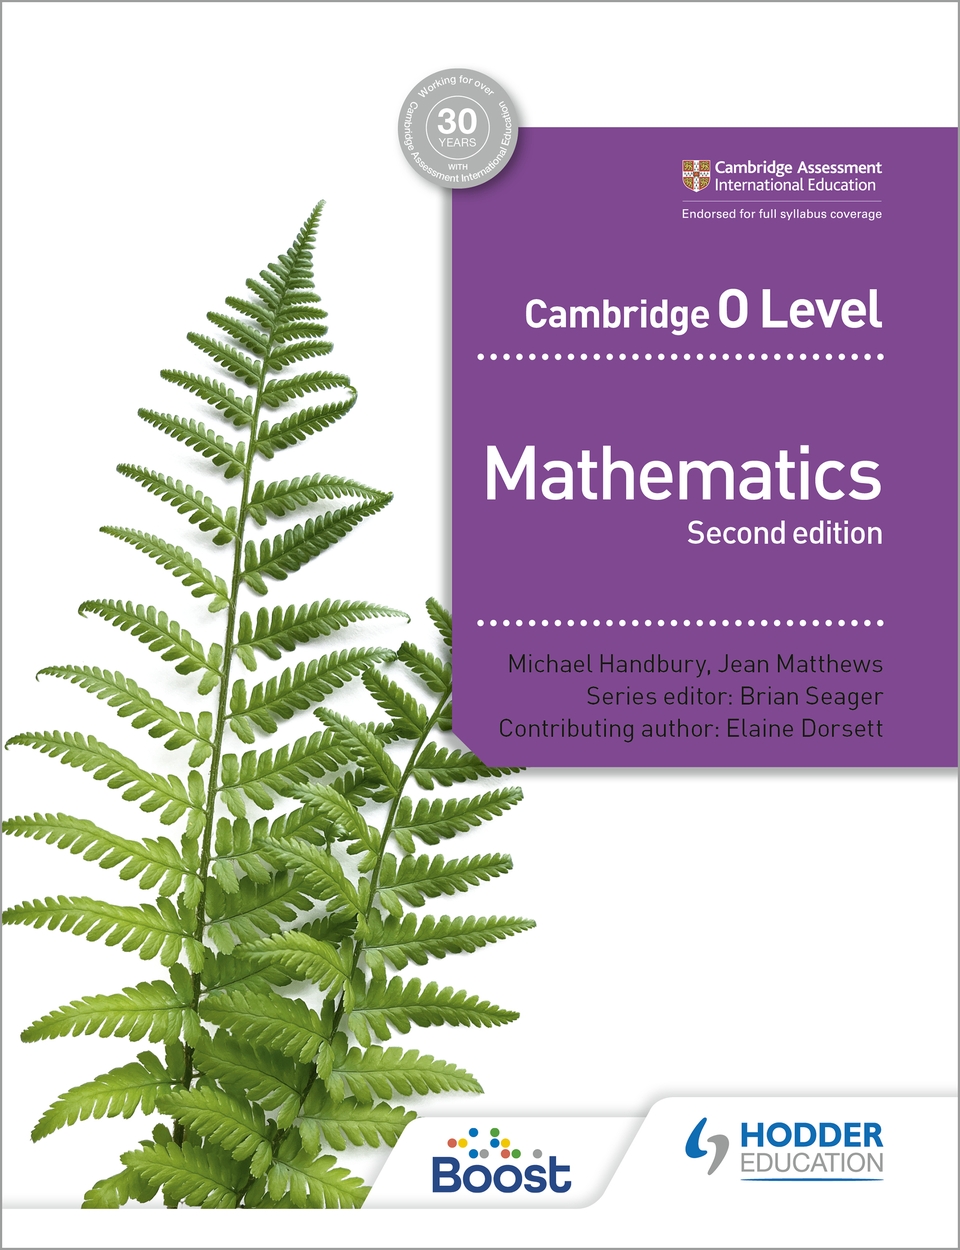 Cambridge O Level Mathematics Second edition by Michael Handbury 